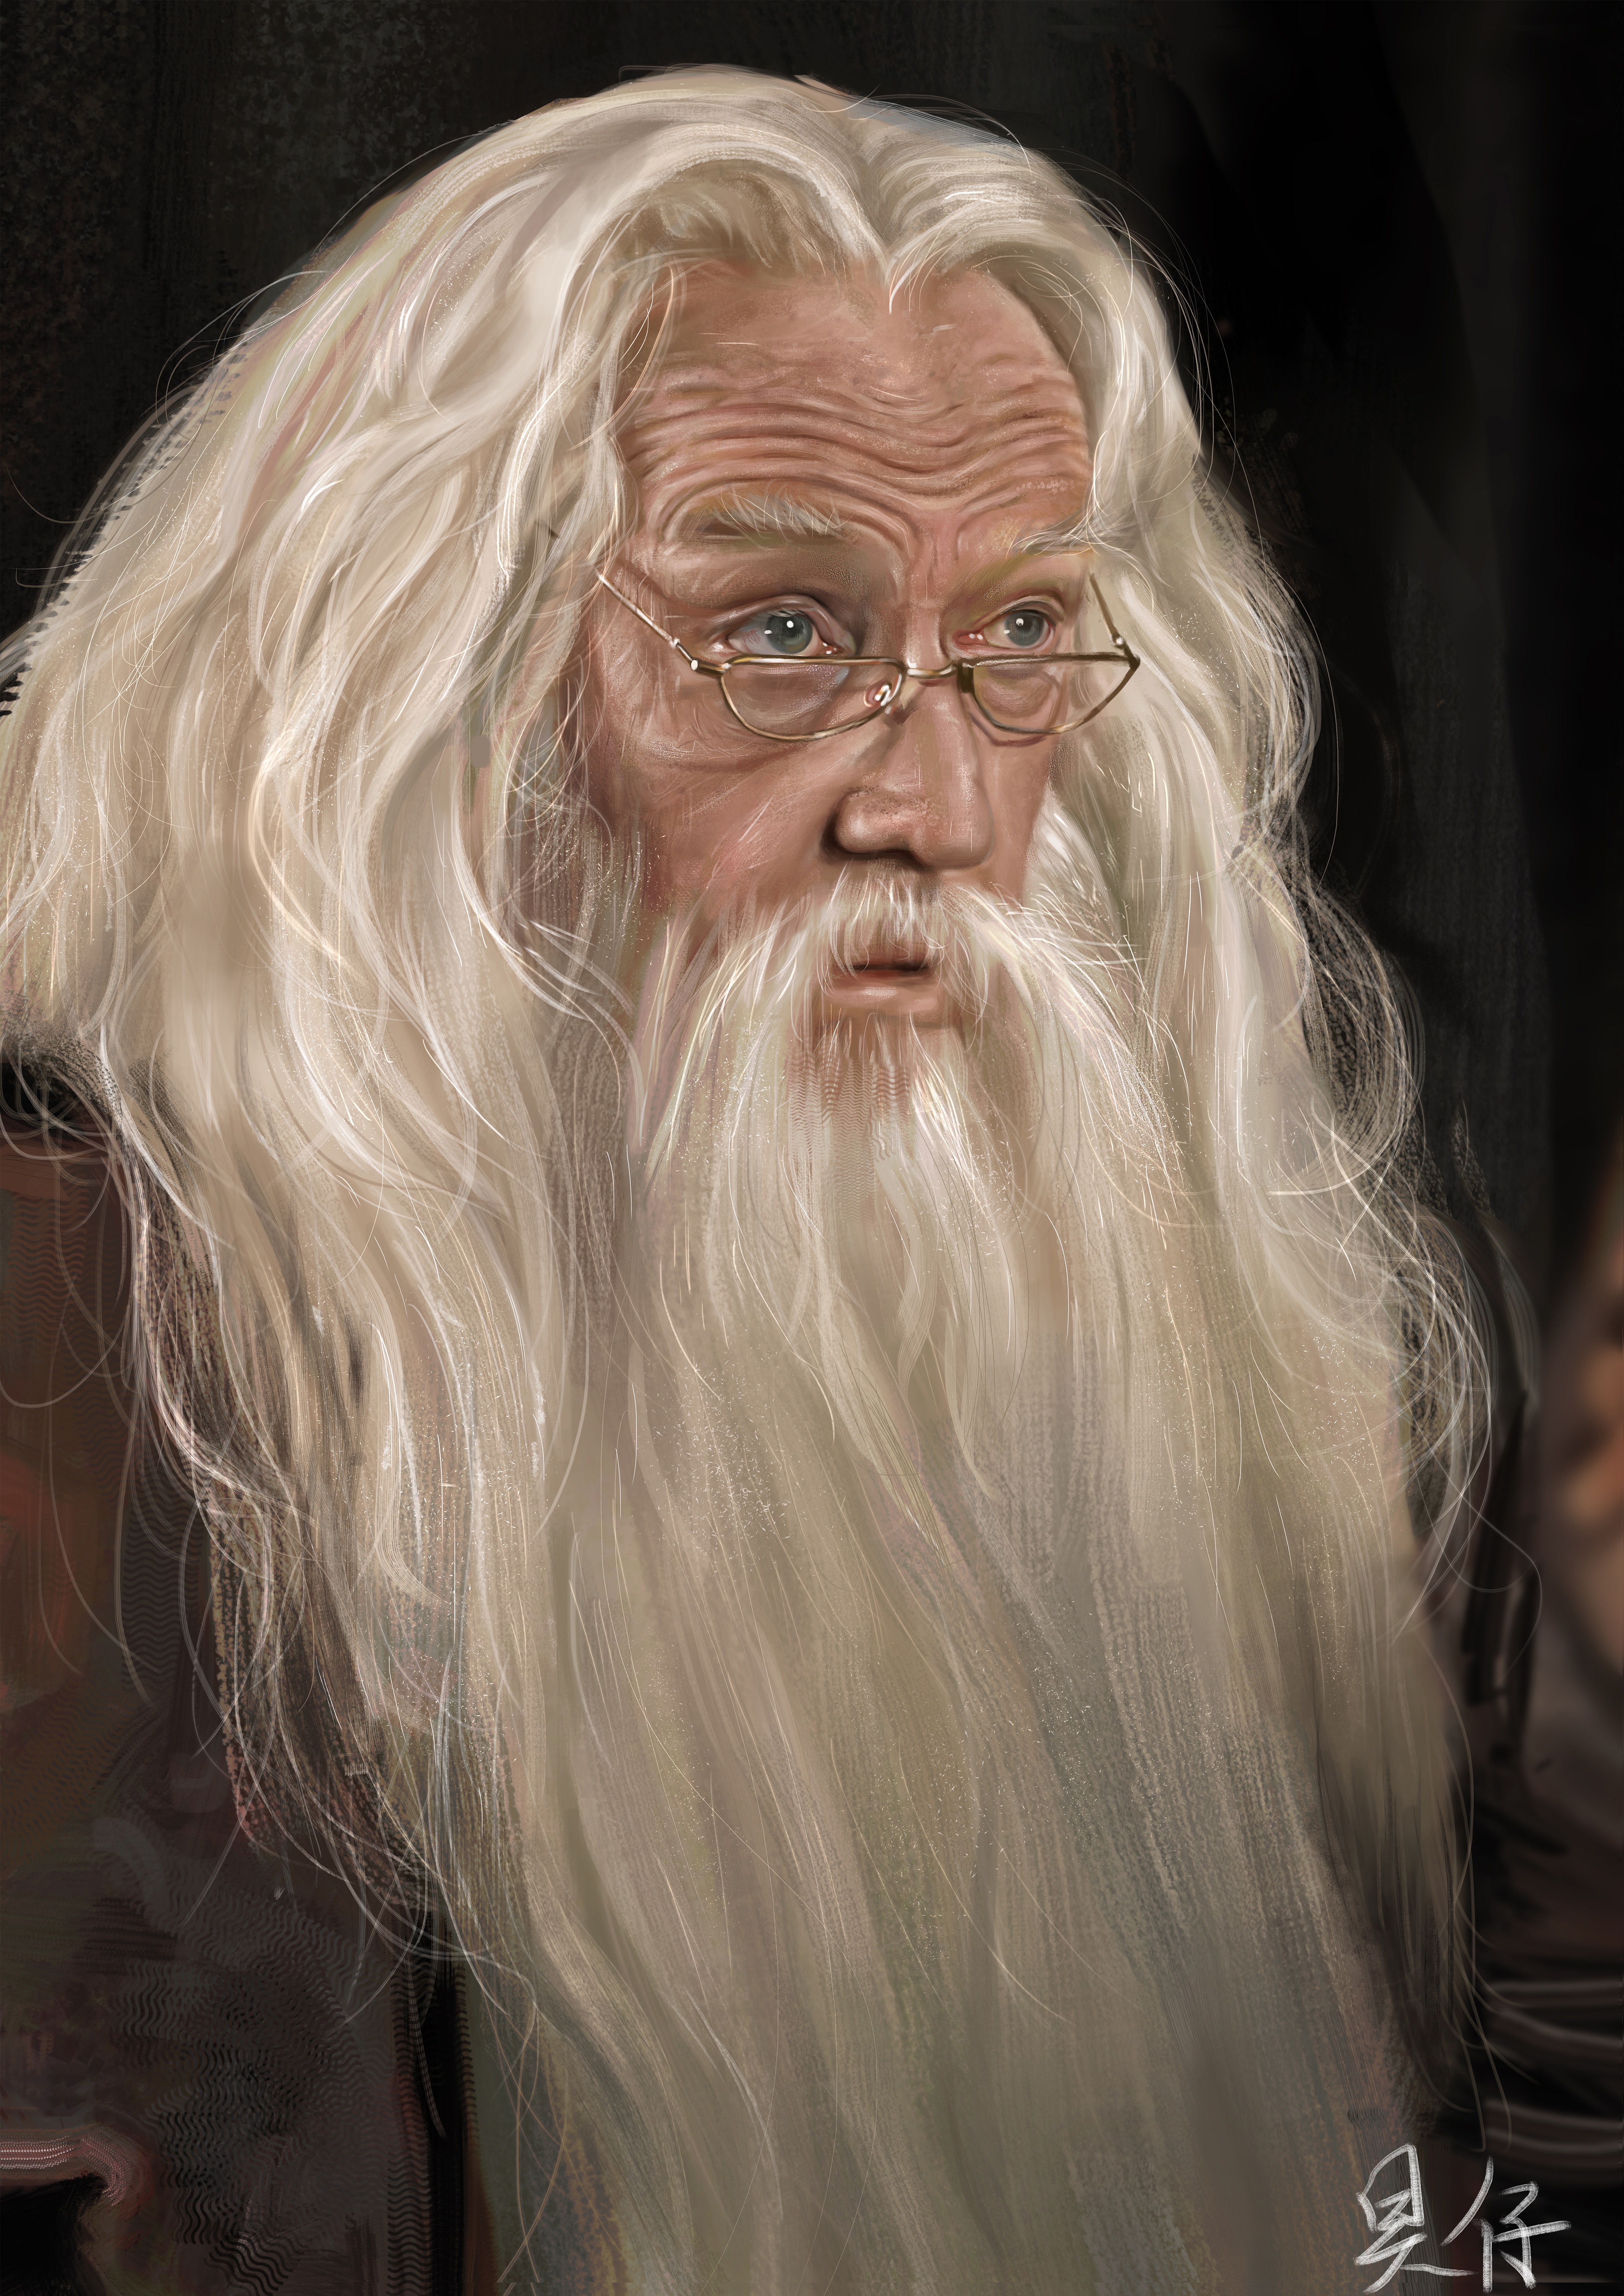 General 4243x6000 digital art digital painting artwork Albus Dumbledore Harry Potter fantasy men white beard beard men with glasses